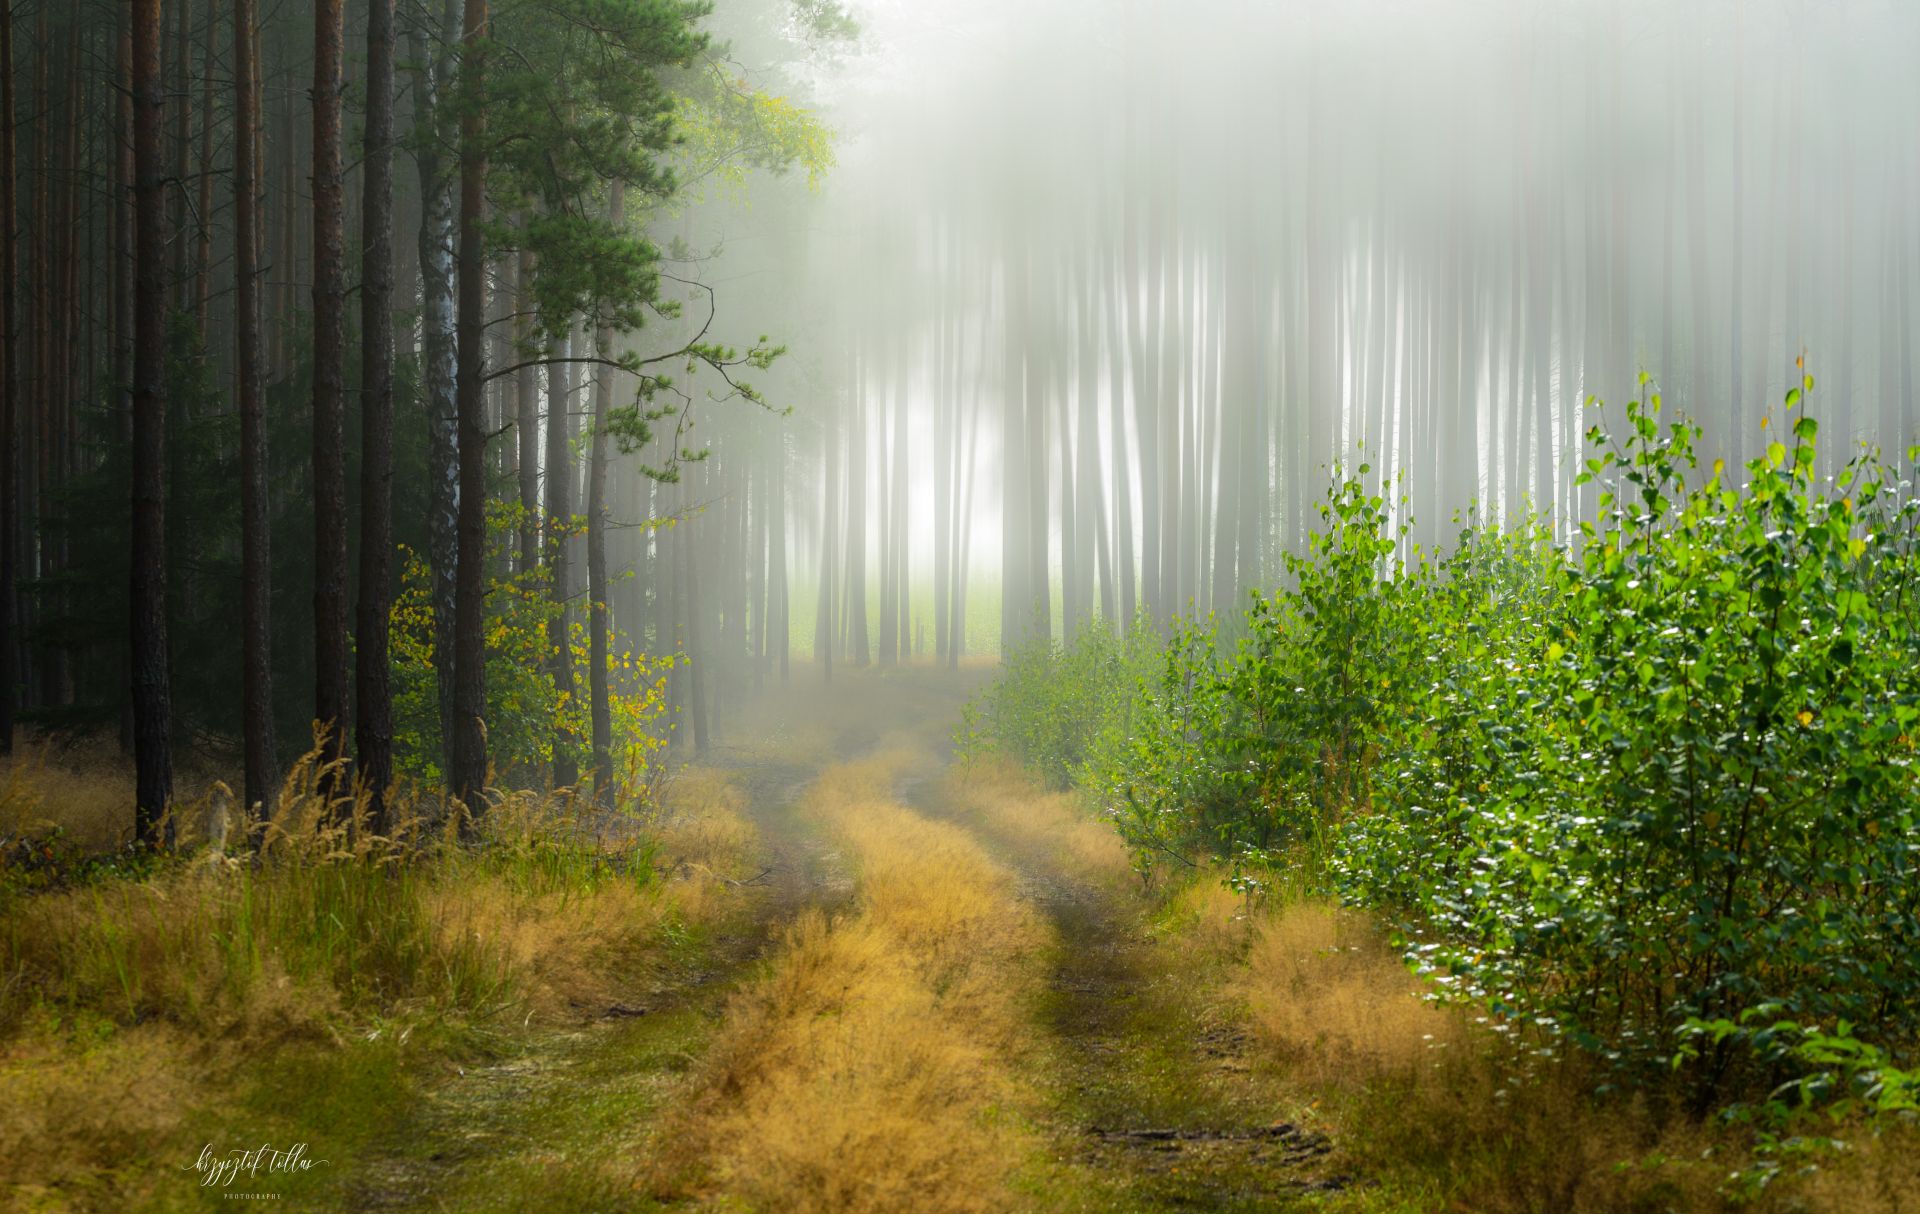  fog  morning light  trees  summer  sky  forest atmosphere  nikon  light  Woodland  Photography  Nature, Krzysztof Tollas